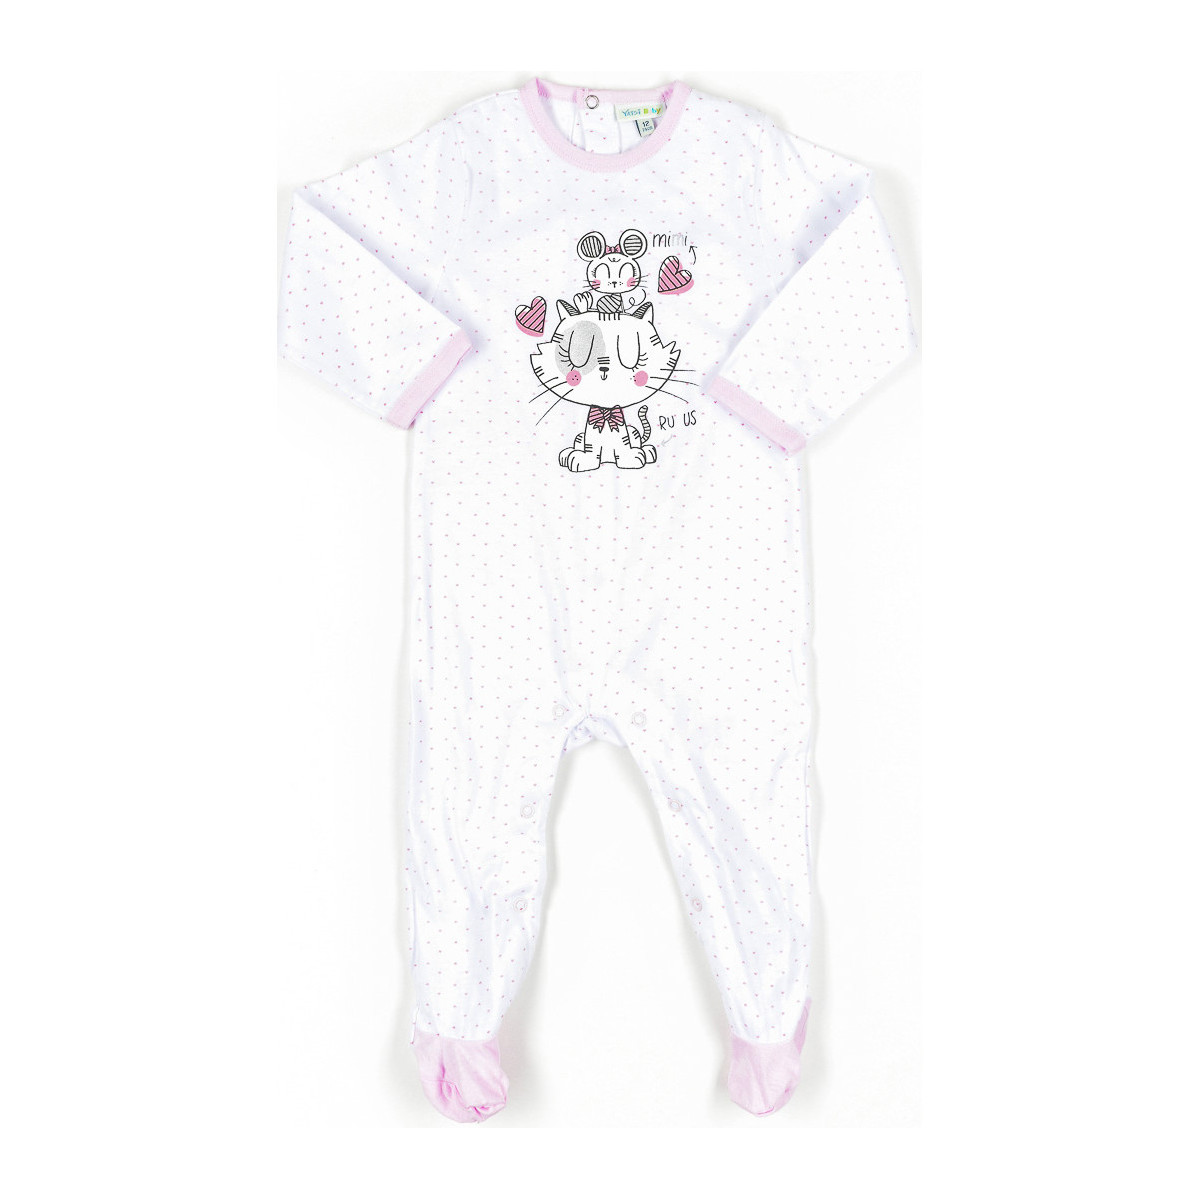 textil Børn Pyjamas / Natskjorte Yatsi 7056-ROSA Flerfarvet